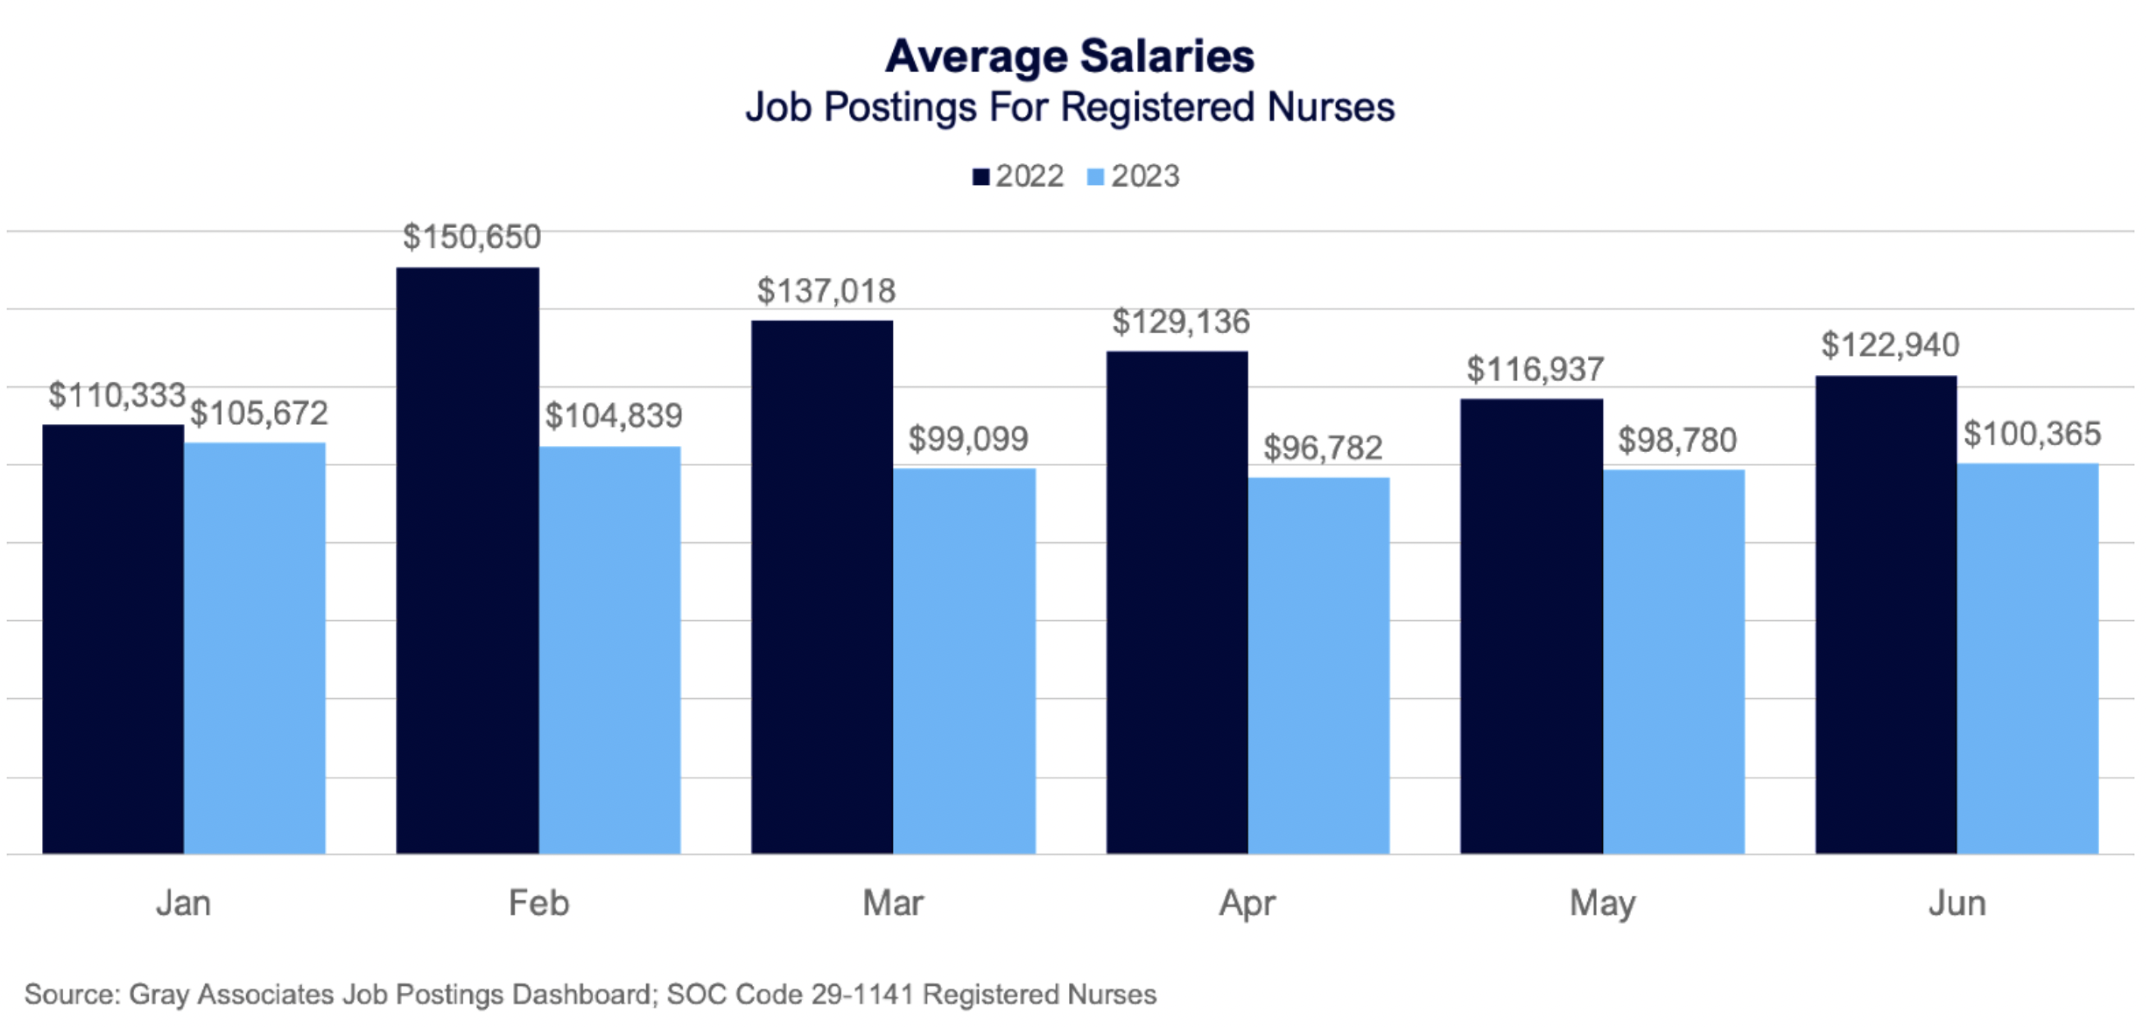 Average salaries - job postings for registered nurses